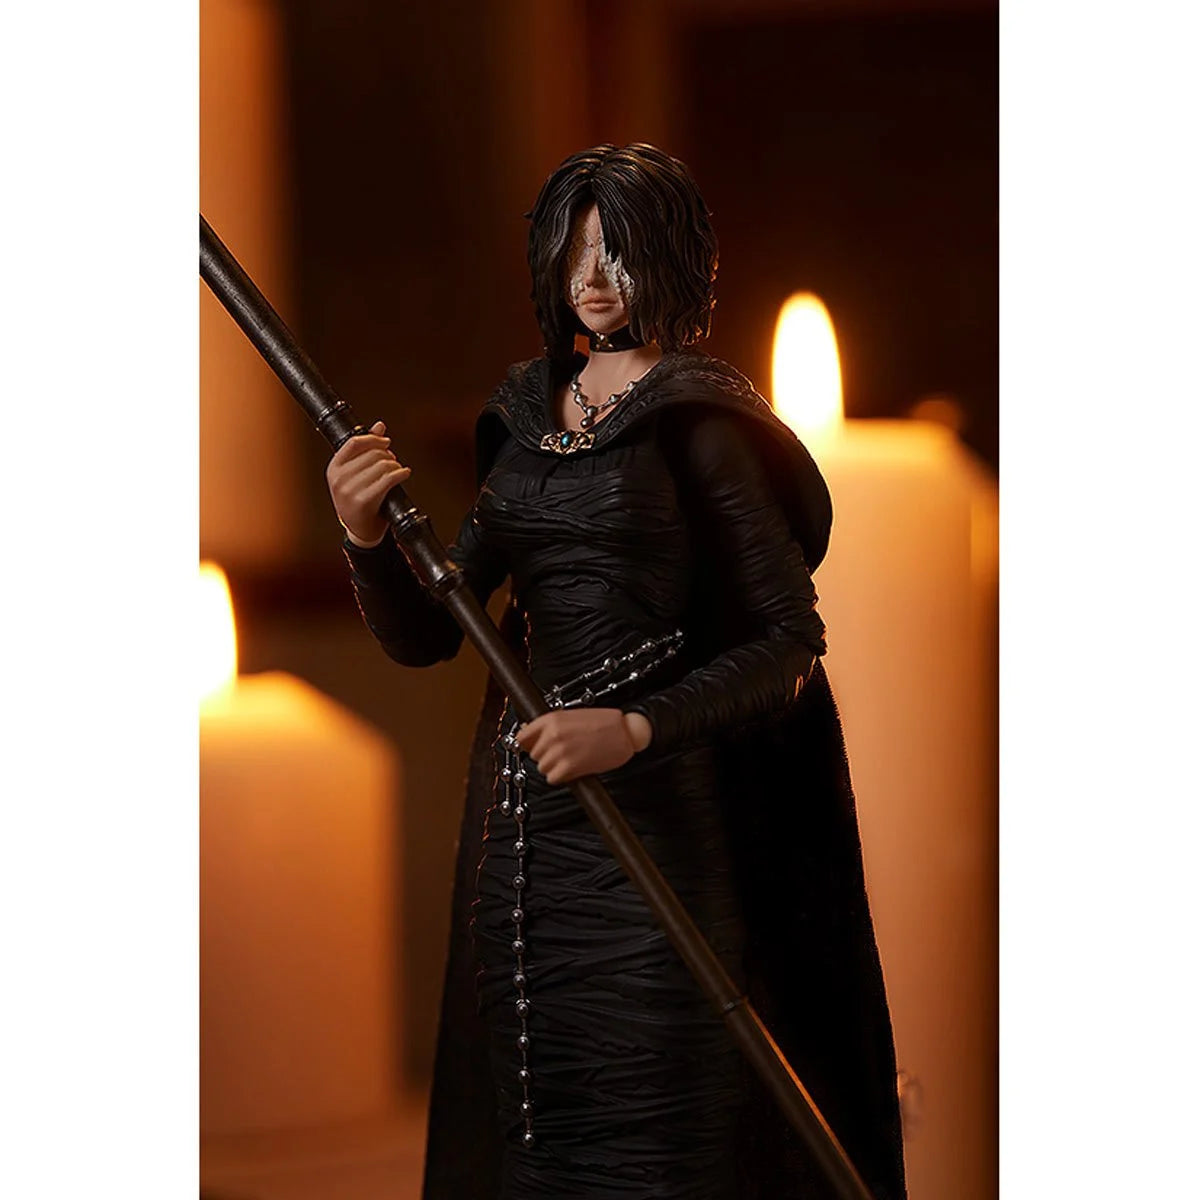 Demon's Souls (PS5) Maiden in Black Figma Action Figure by Good Smile Company -Good Smile Company - India - www.superherotoystore.com